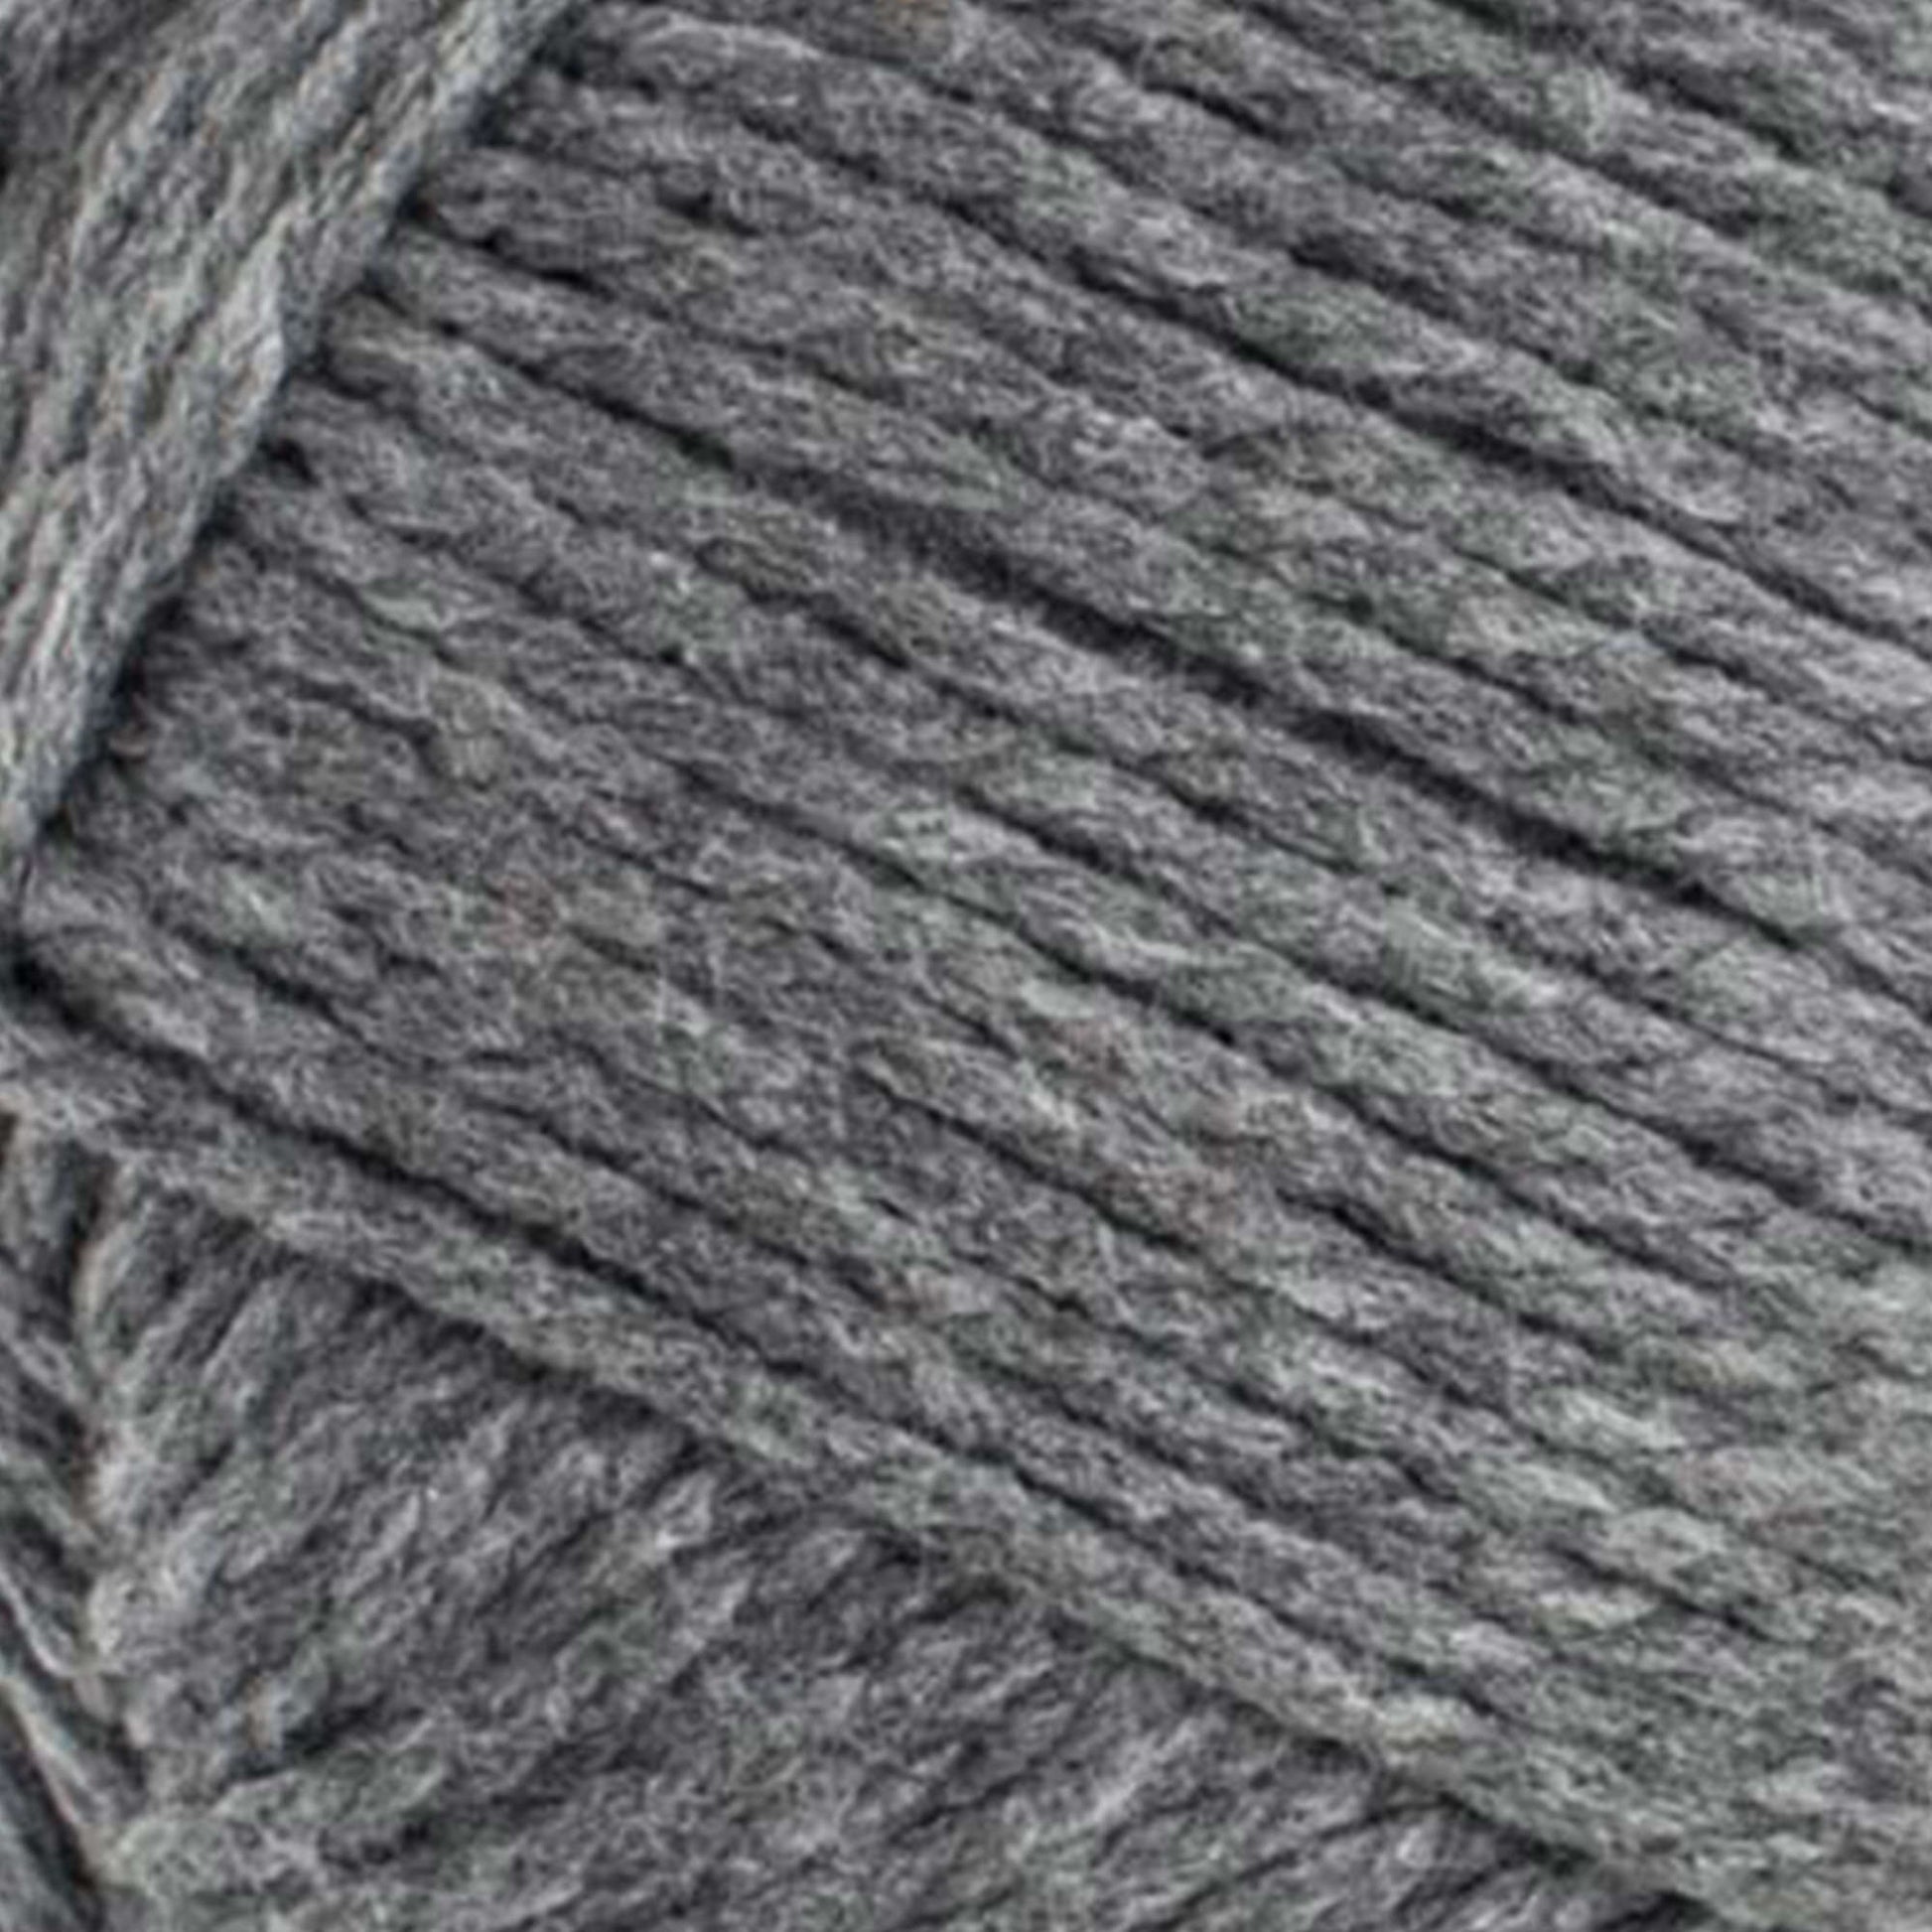 Bernat Softee Chunky Knitting Yarn in Brass | Size: 400g/14oz | Pattern: Knit | by Yarnspirations